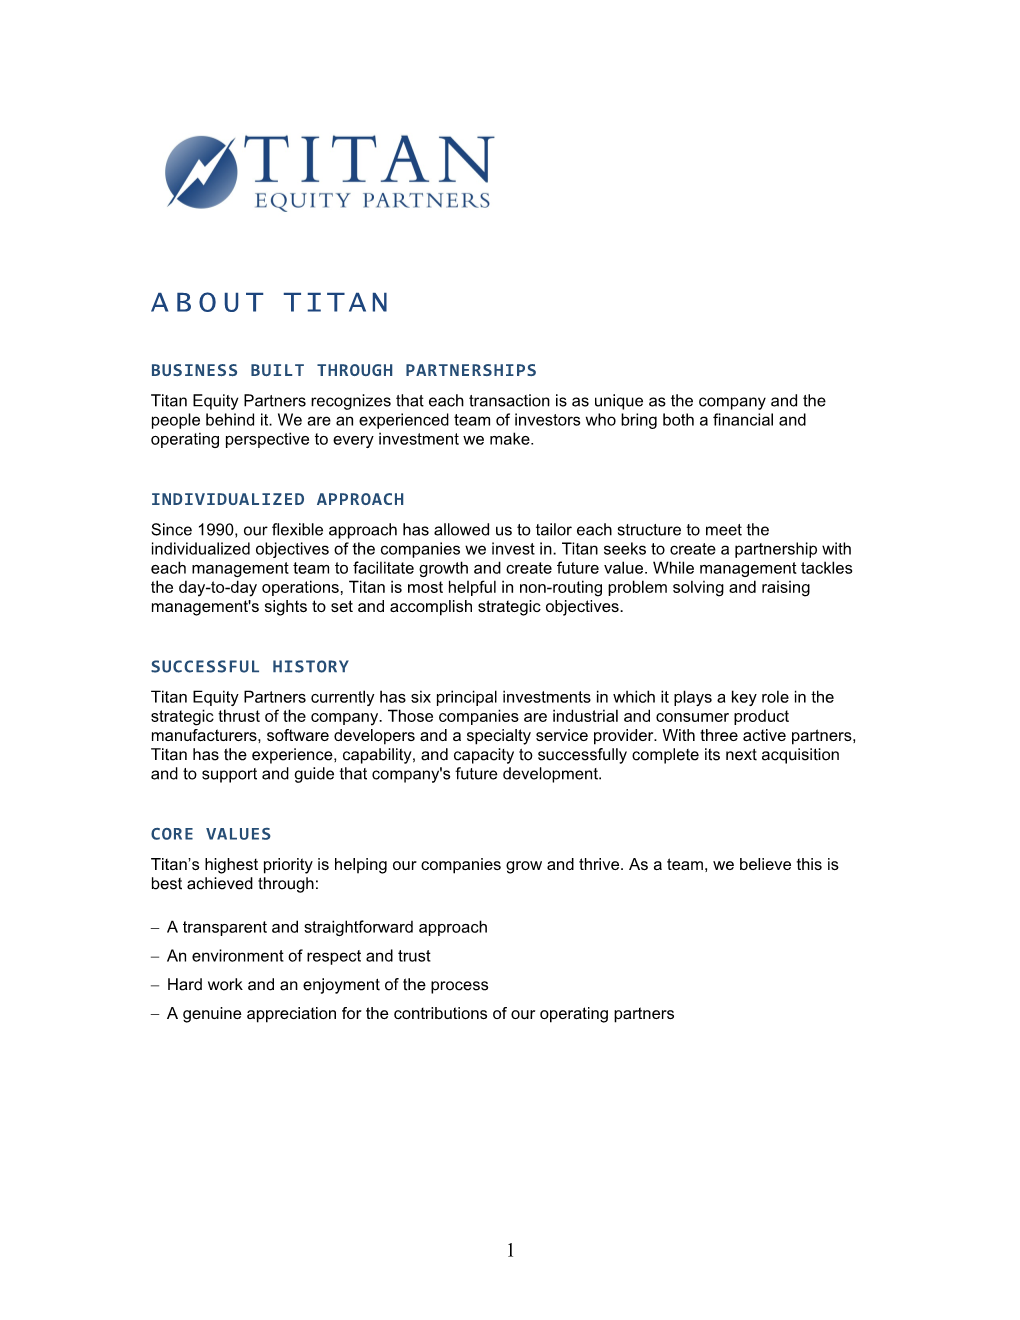 Titan Equity Partners, LLC